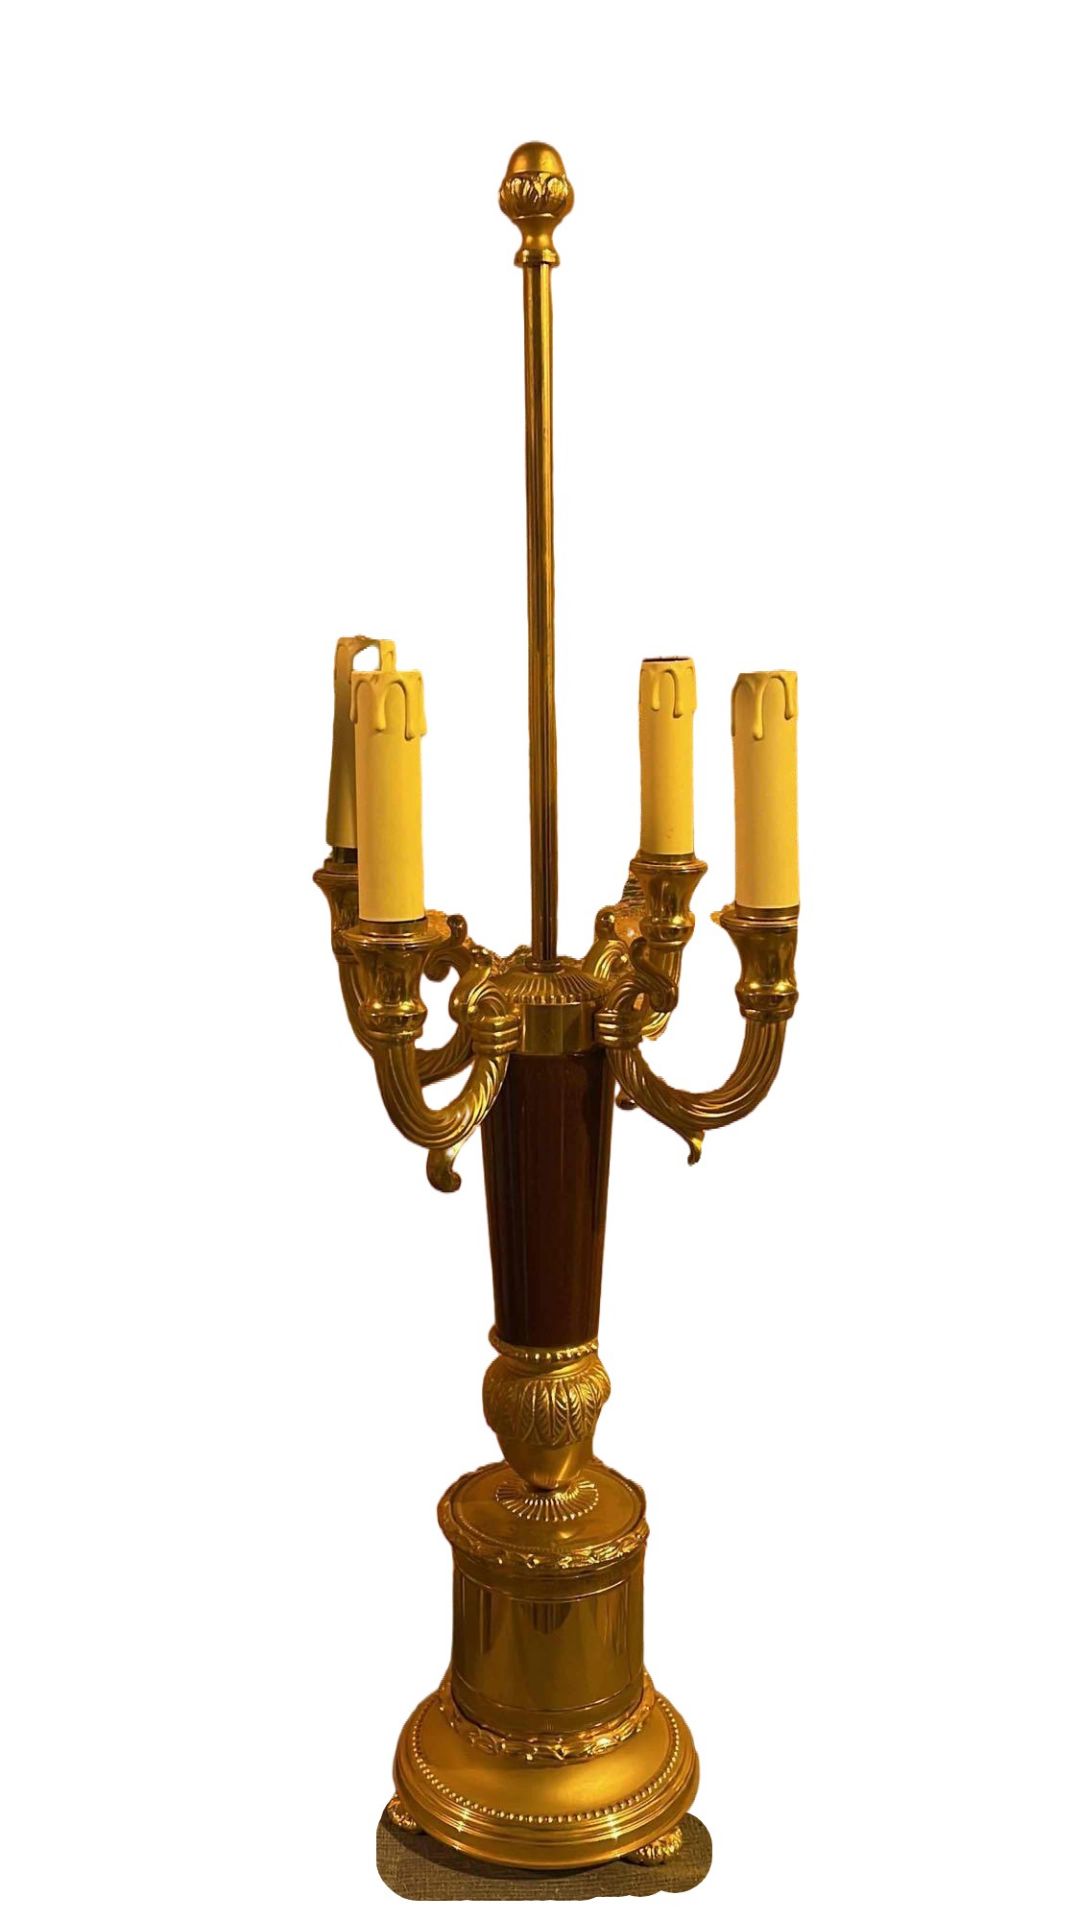 Laudarte S.R.L Mod. Pandora Gold And Burgundy Table Lamp 76cm Giovanni Maria Malerba Di Busca -